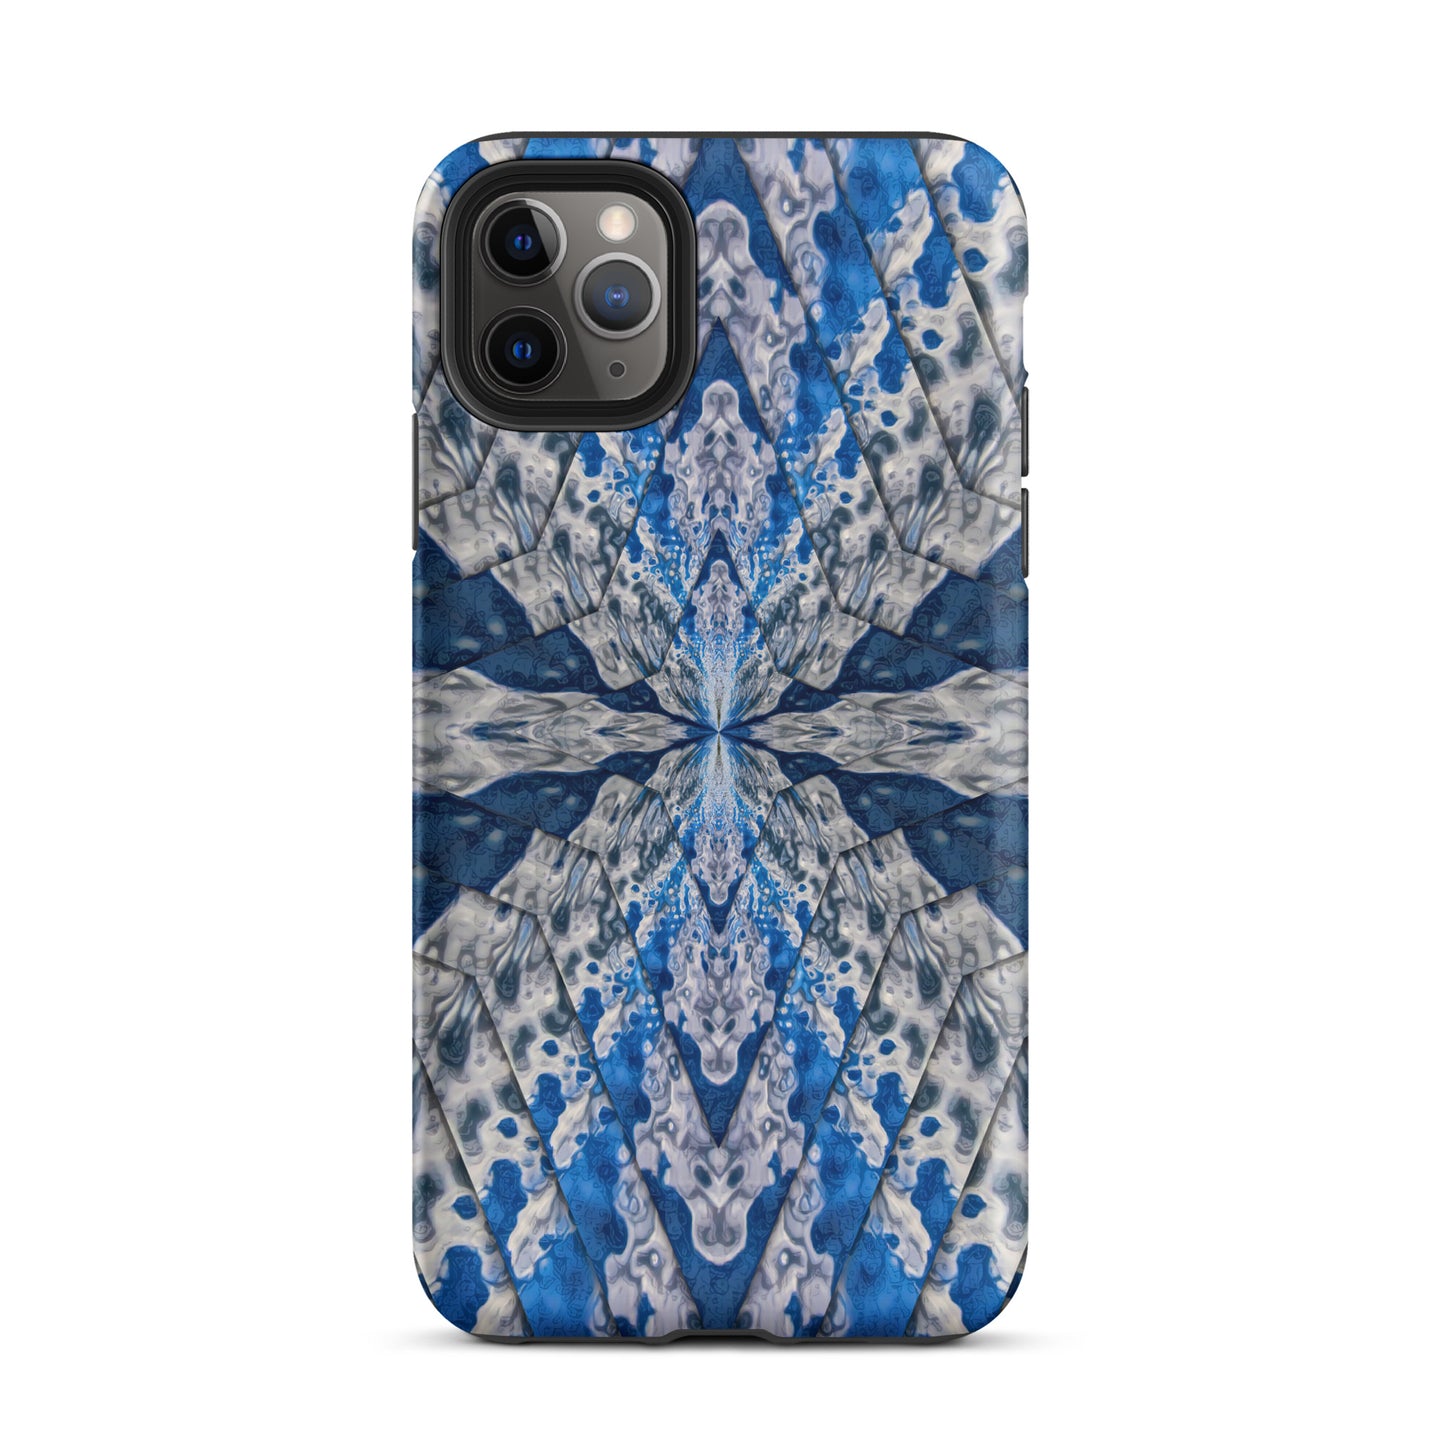 "Aqua Math" iCanvas Tough iPhone case